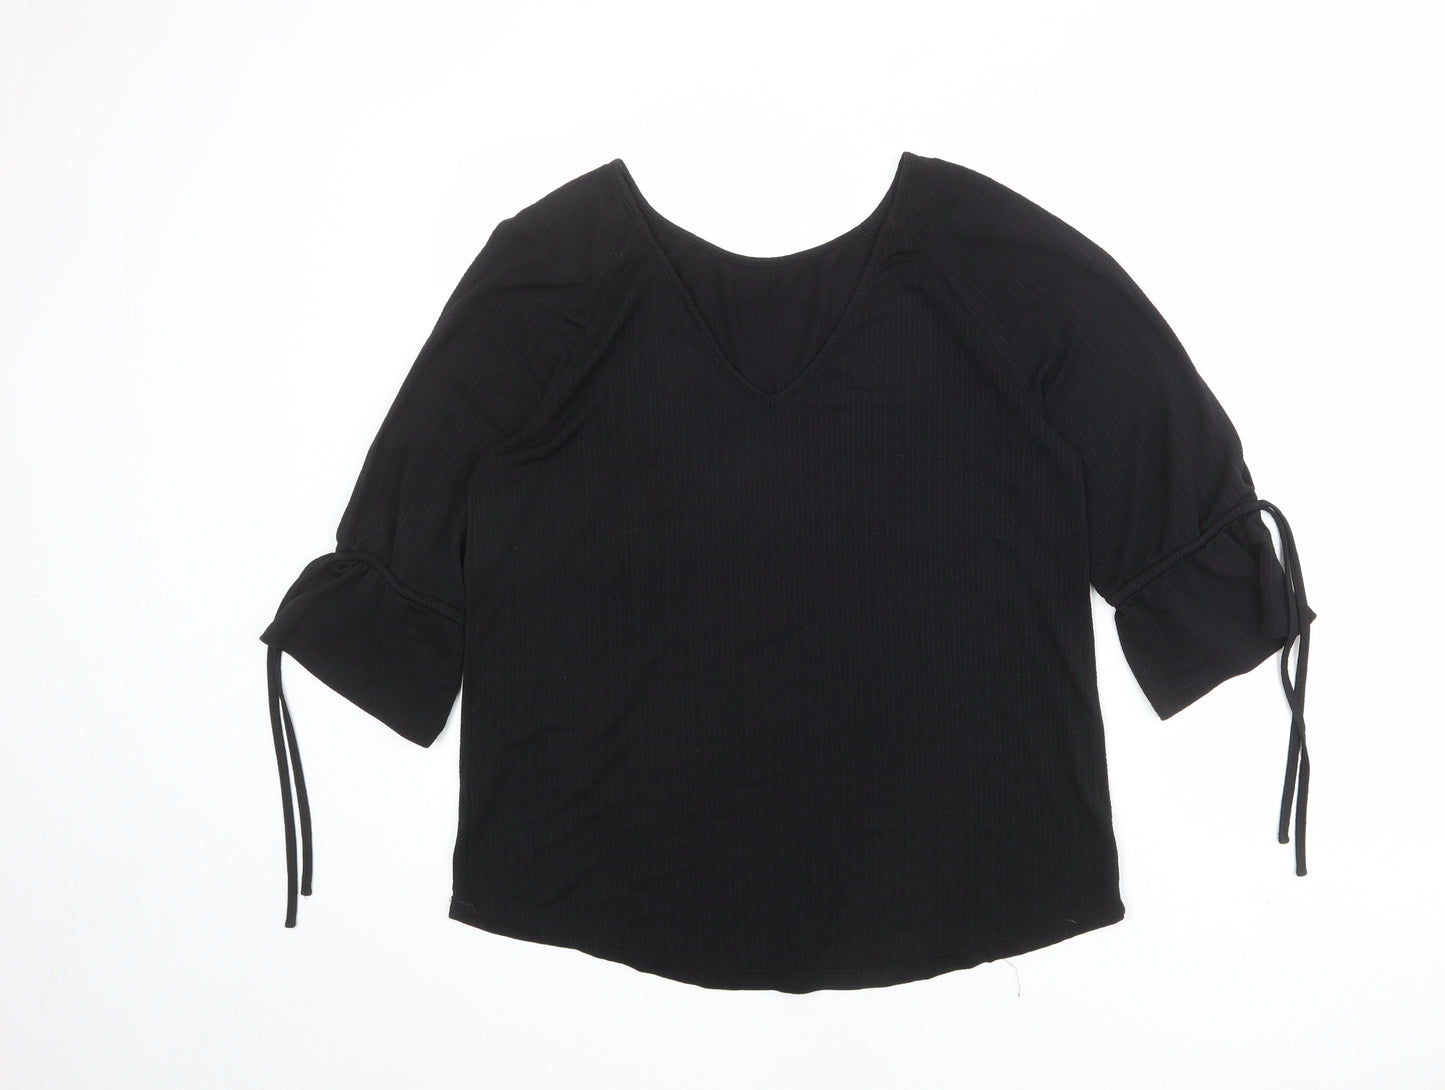 NEXT Womens Black Polyester Basic Blouse Size 14 Round Neck